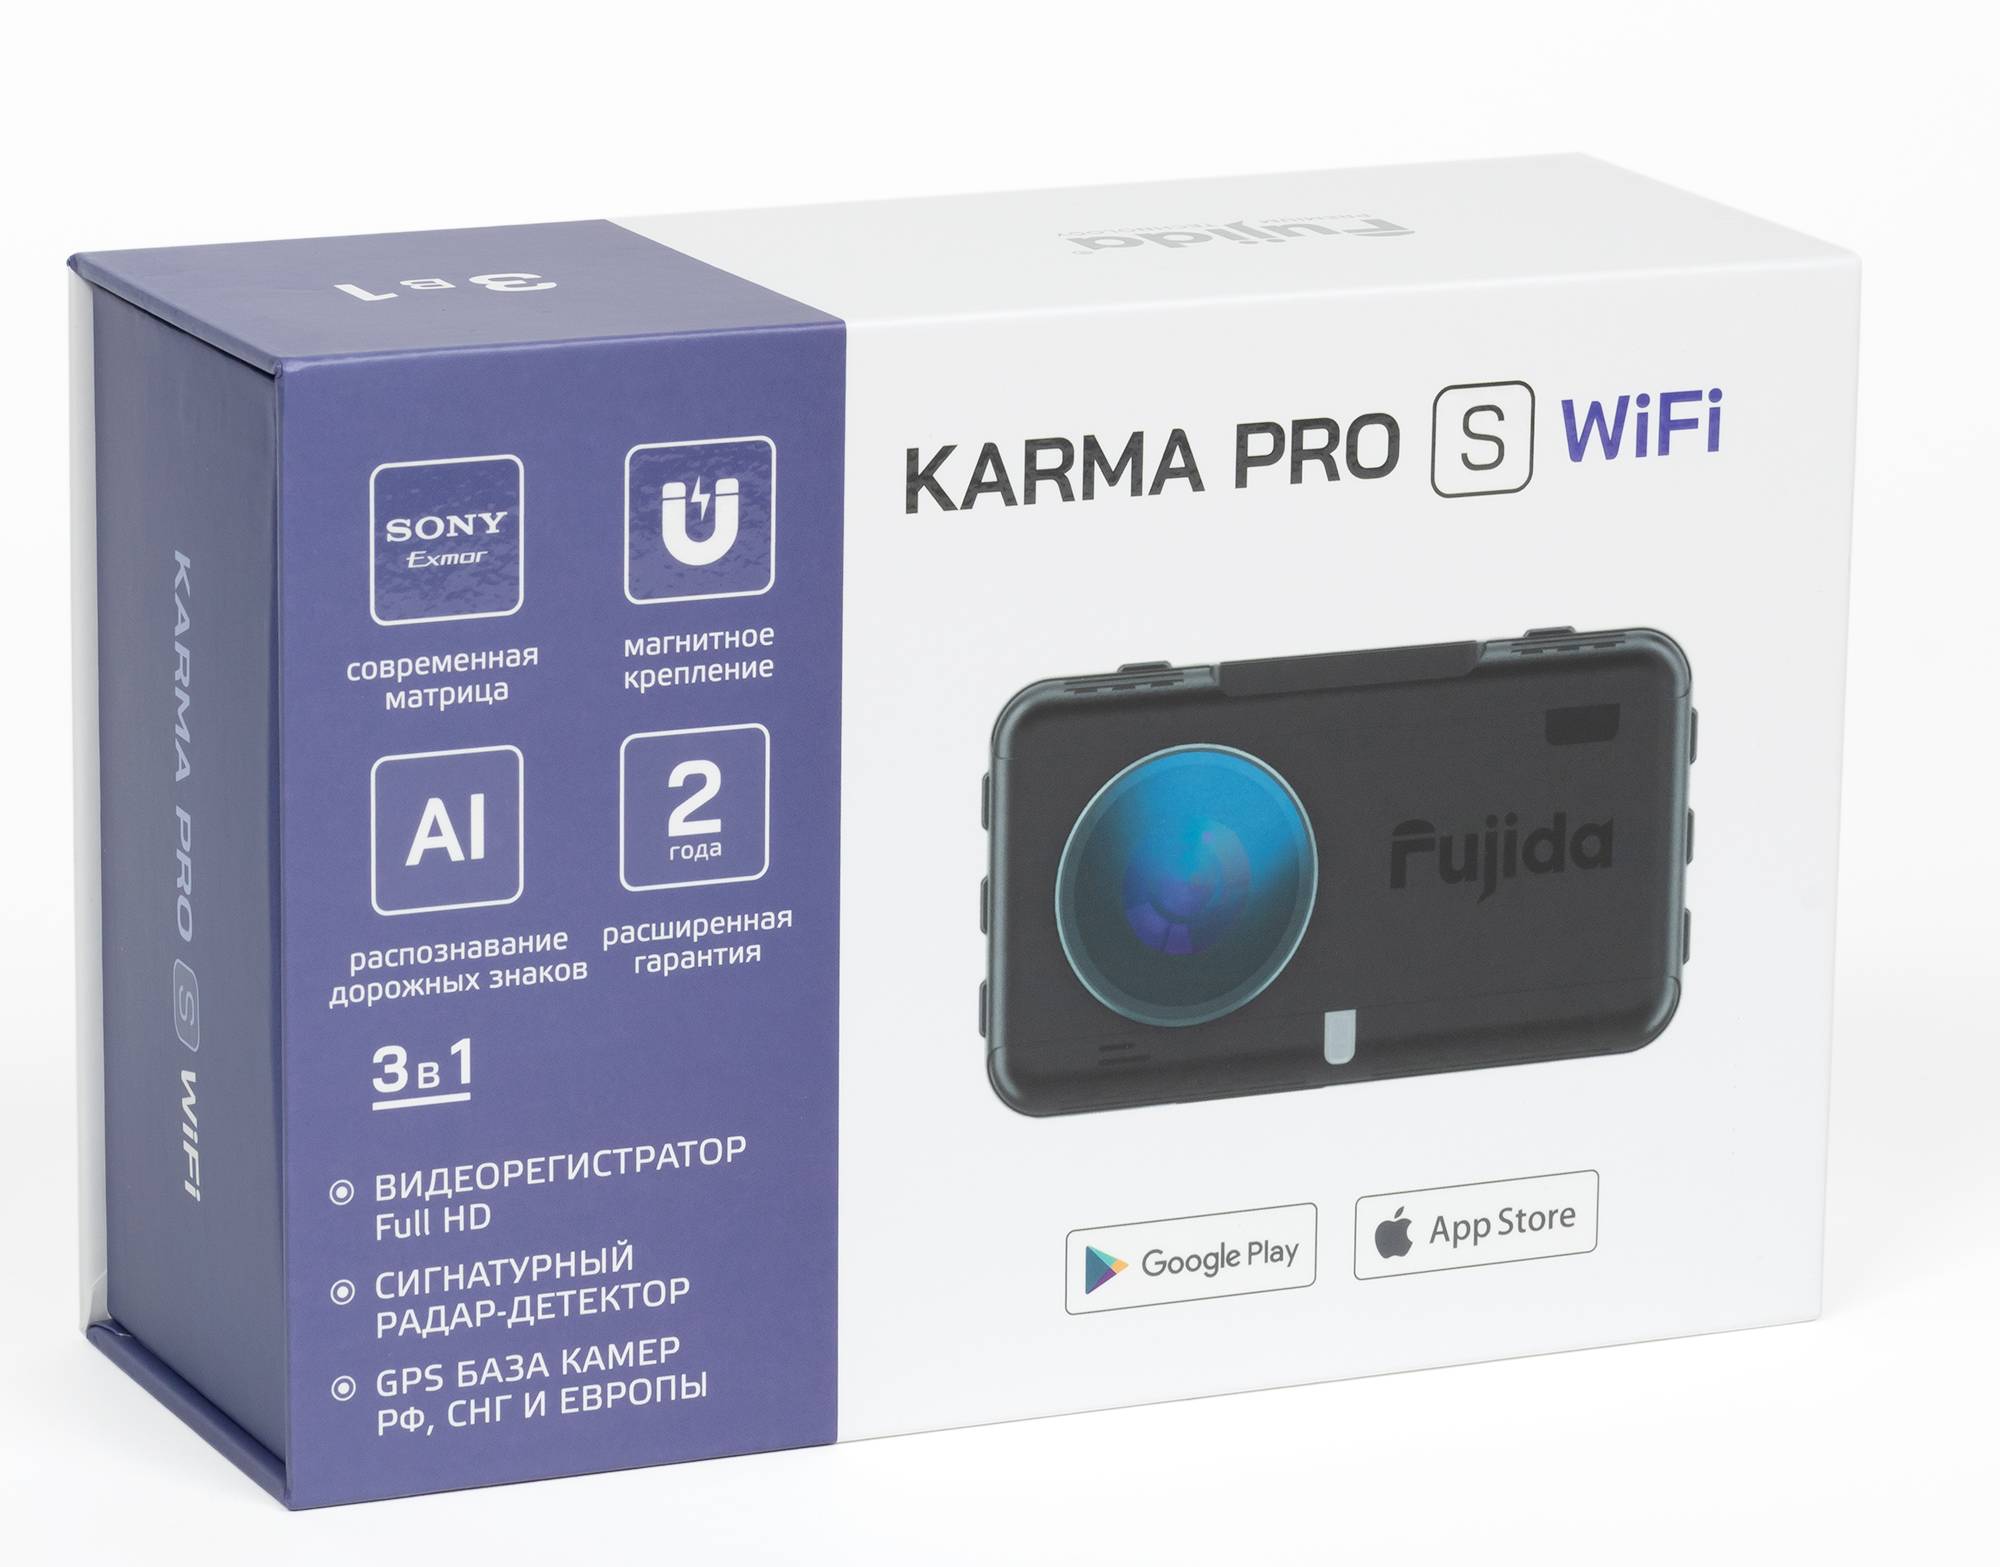 Fujida karma pro wifi купить. Видеорегистратор Fujida Karma s. Видеорегистратор Fujida Karma Pro s. Fujida Karma Pro s WIFI. Fujieda Karma Pro s.